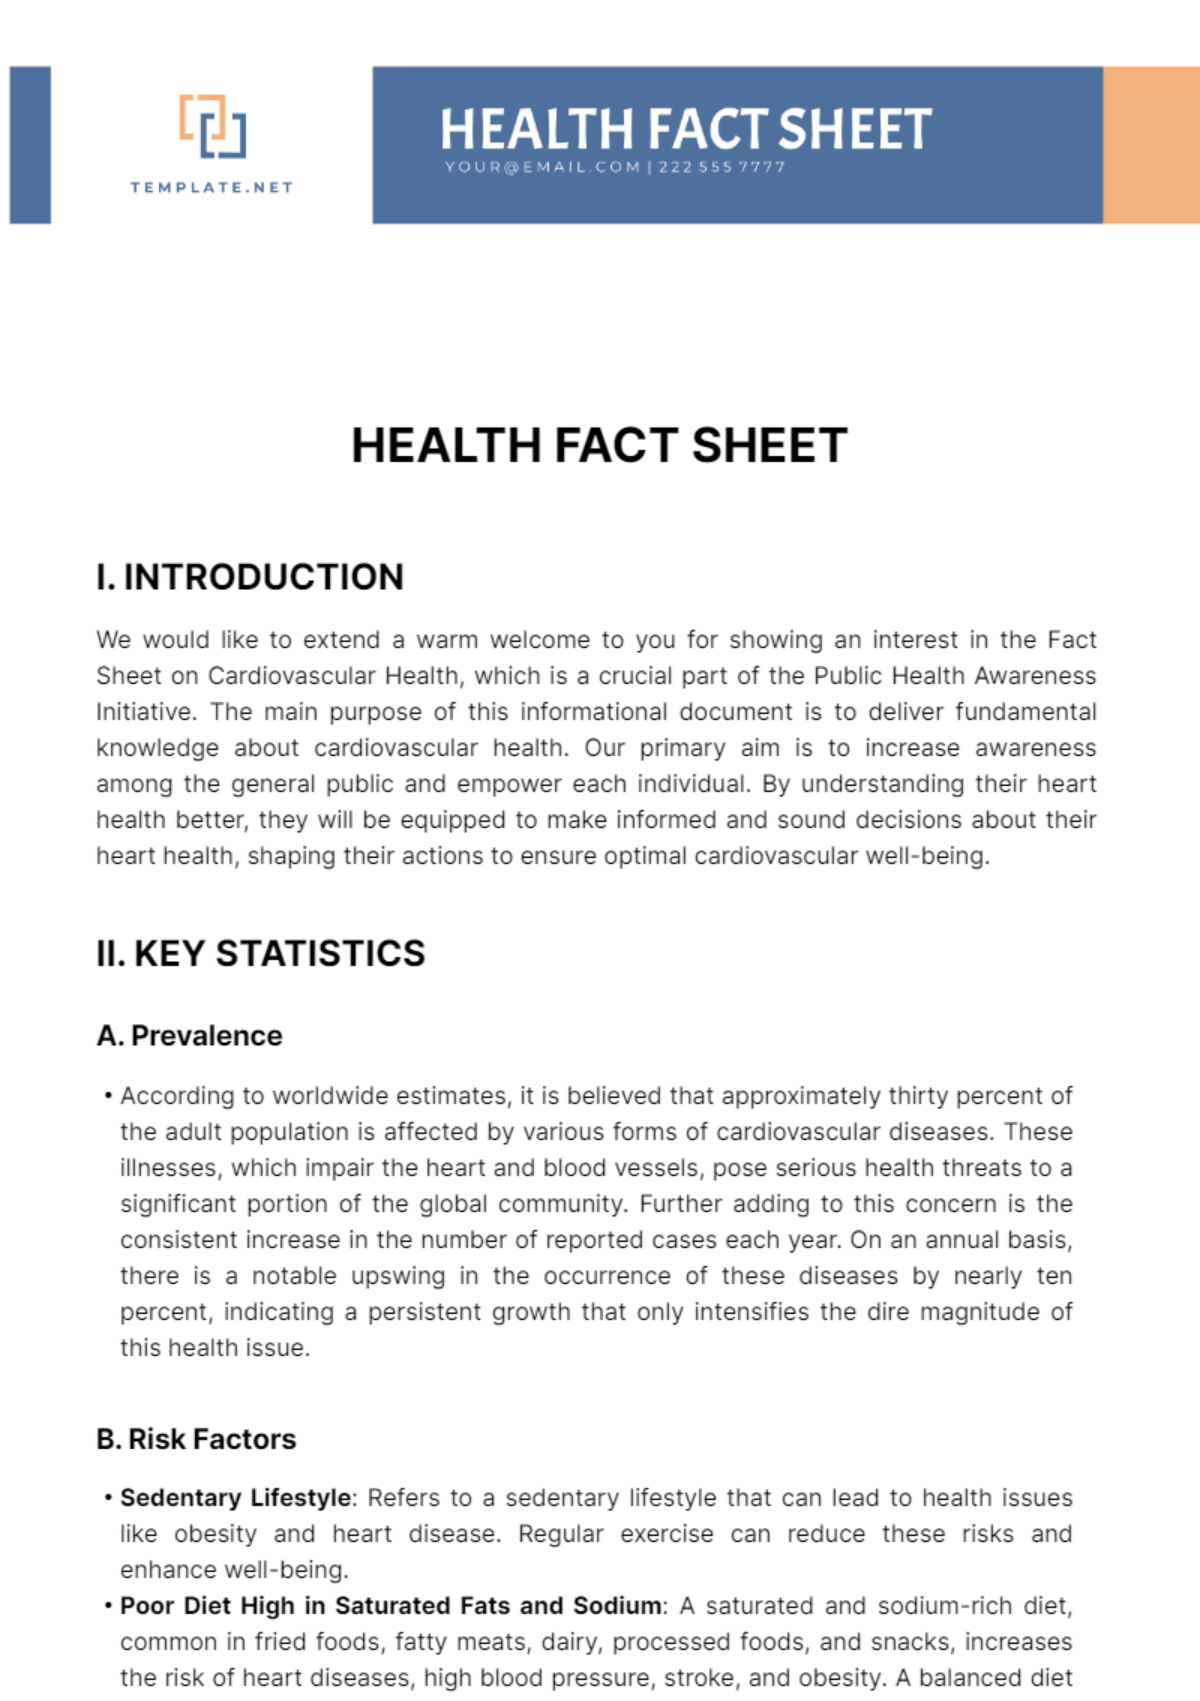 Free Health Fact Sheet Template